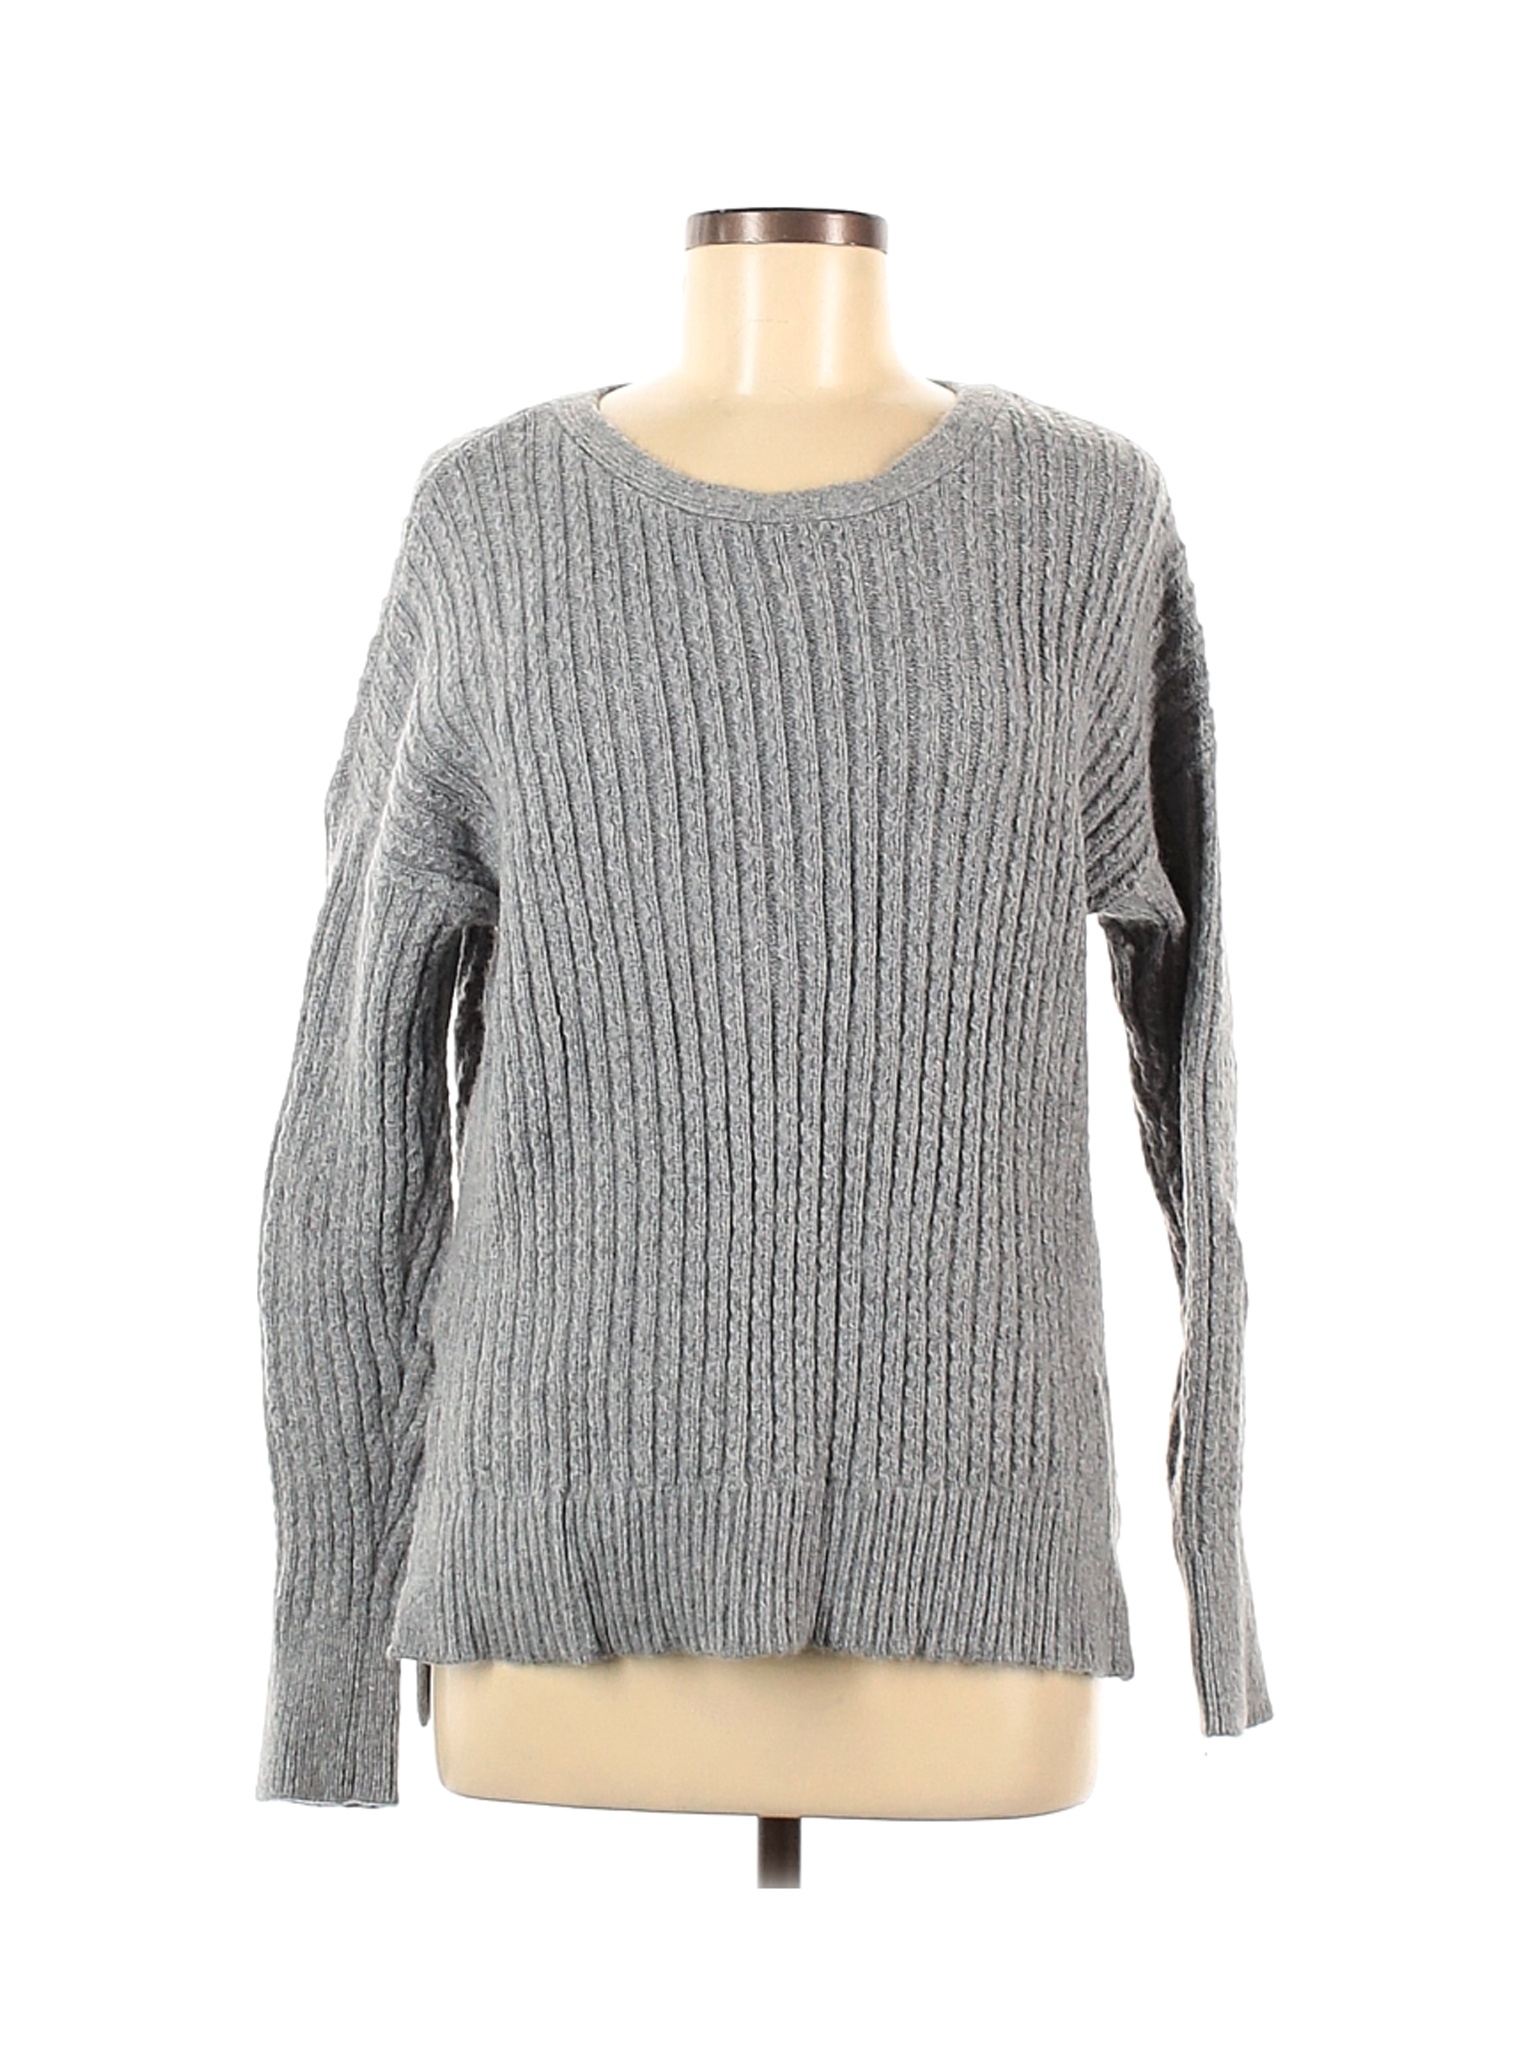 Ann Taylor Women Gray Pullover Sweater M | eBay